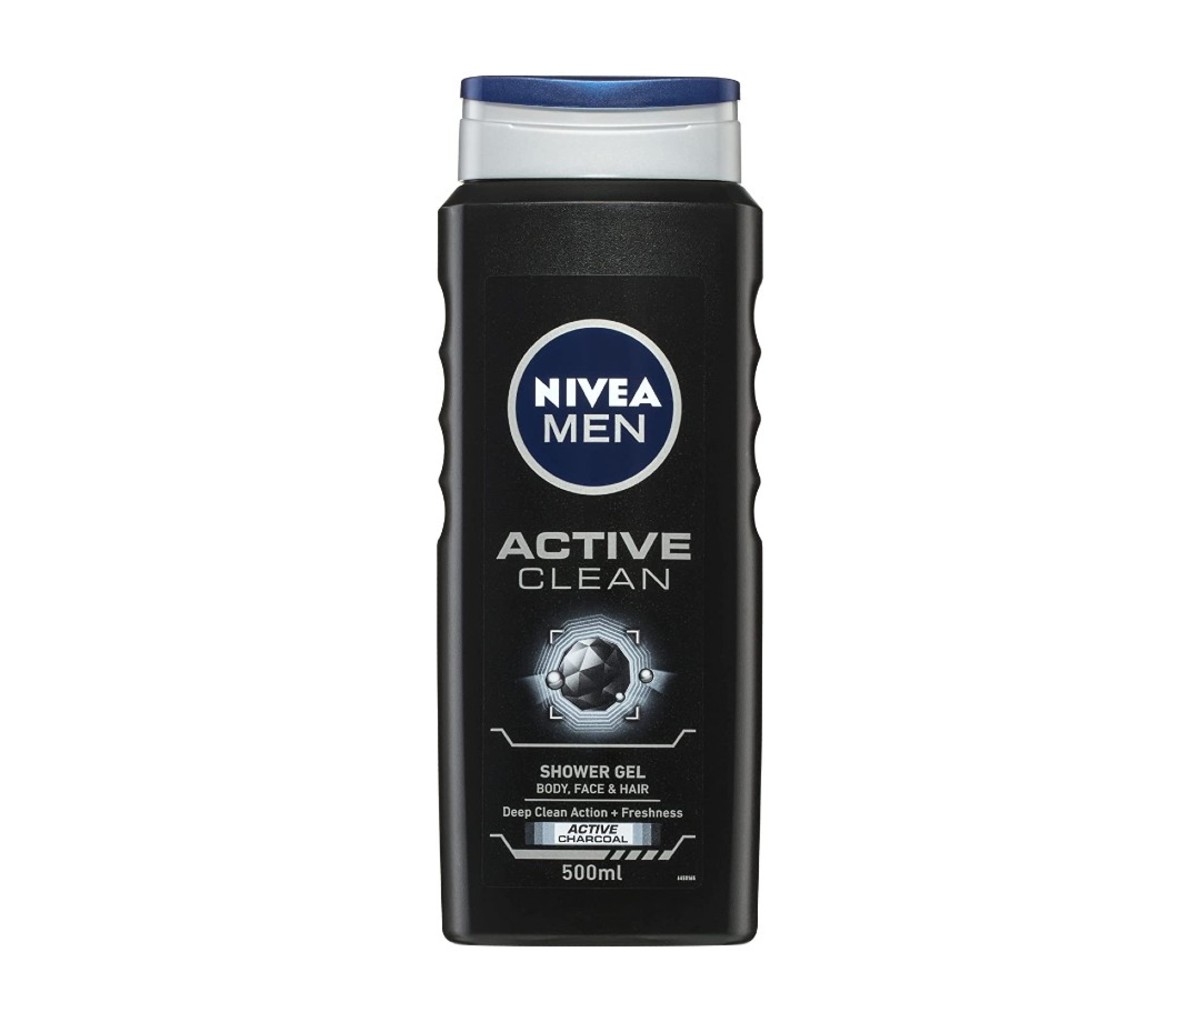 https://www.mensjournal.com/.image/t_share/MTk2MTM3MTA4NjQ1ODgxMzQ5/9-nivea-men-active-clean-body-wash.jpg